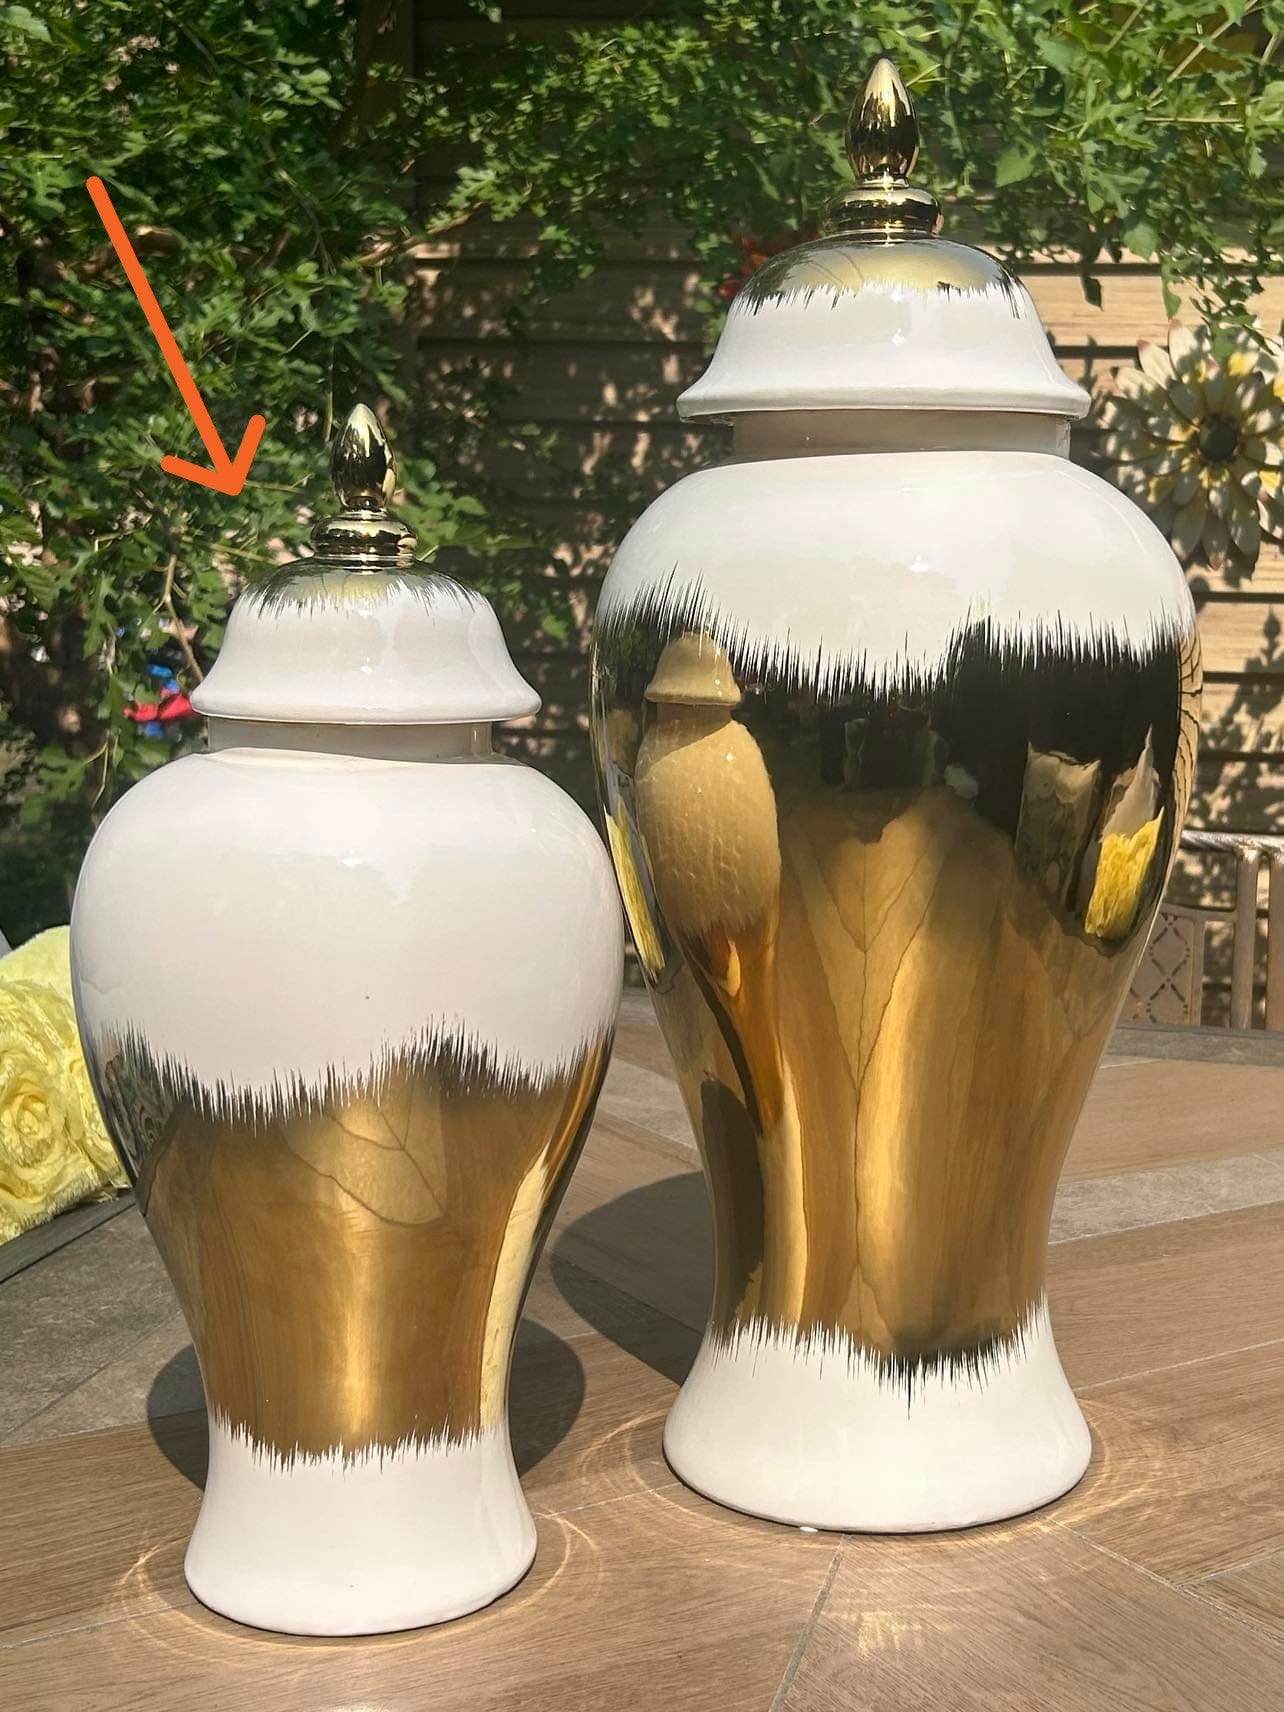 Mirror Me Gold Ombre Vase